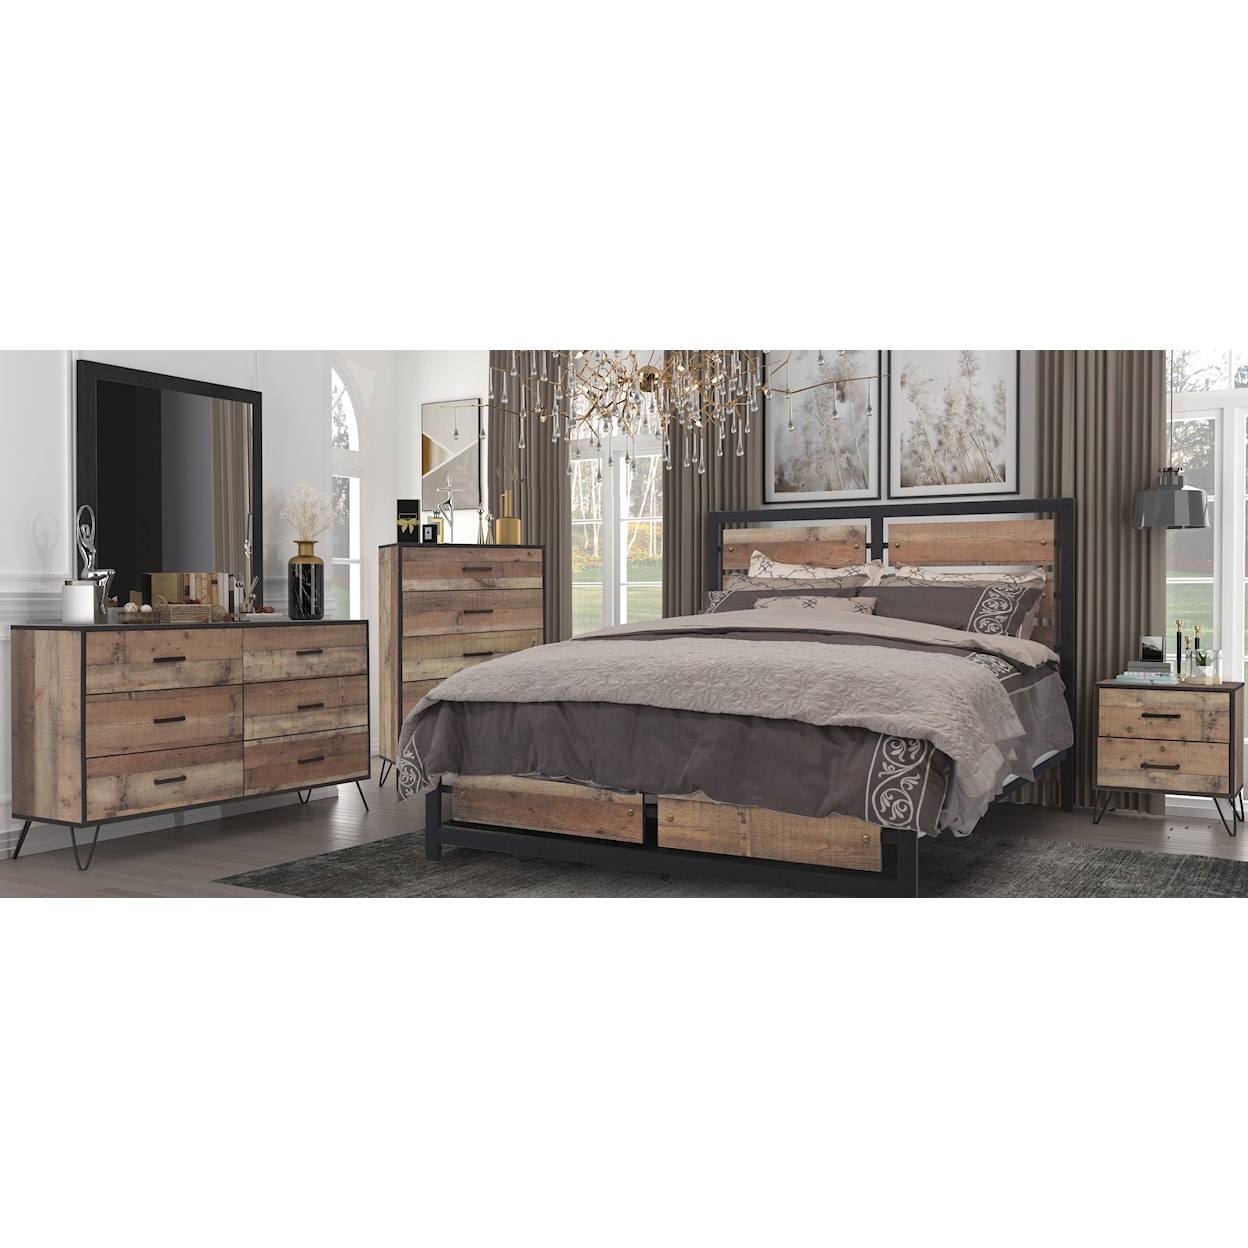 New Classic Furniture Elk River King Bedroom Set